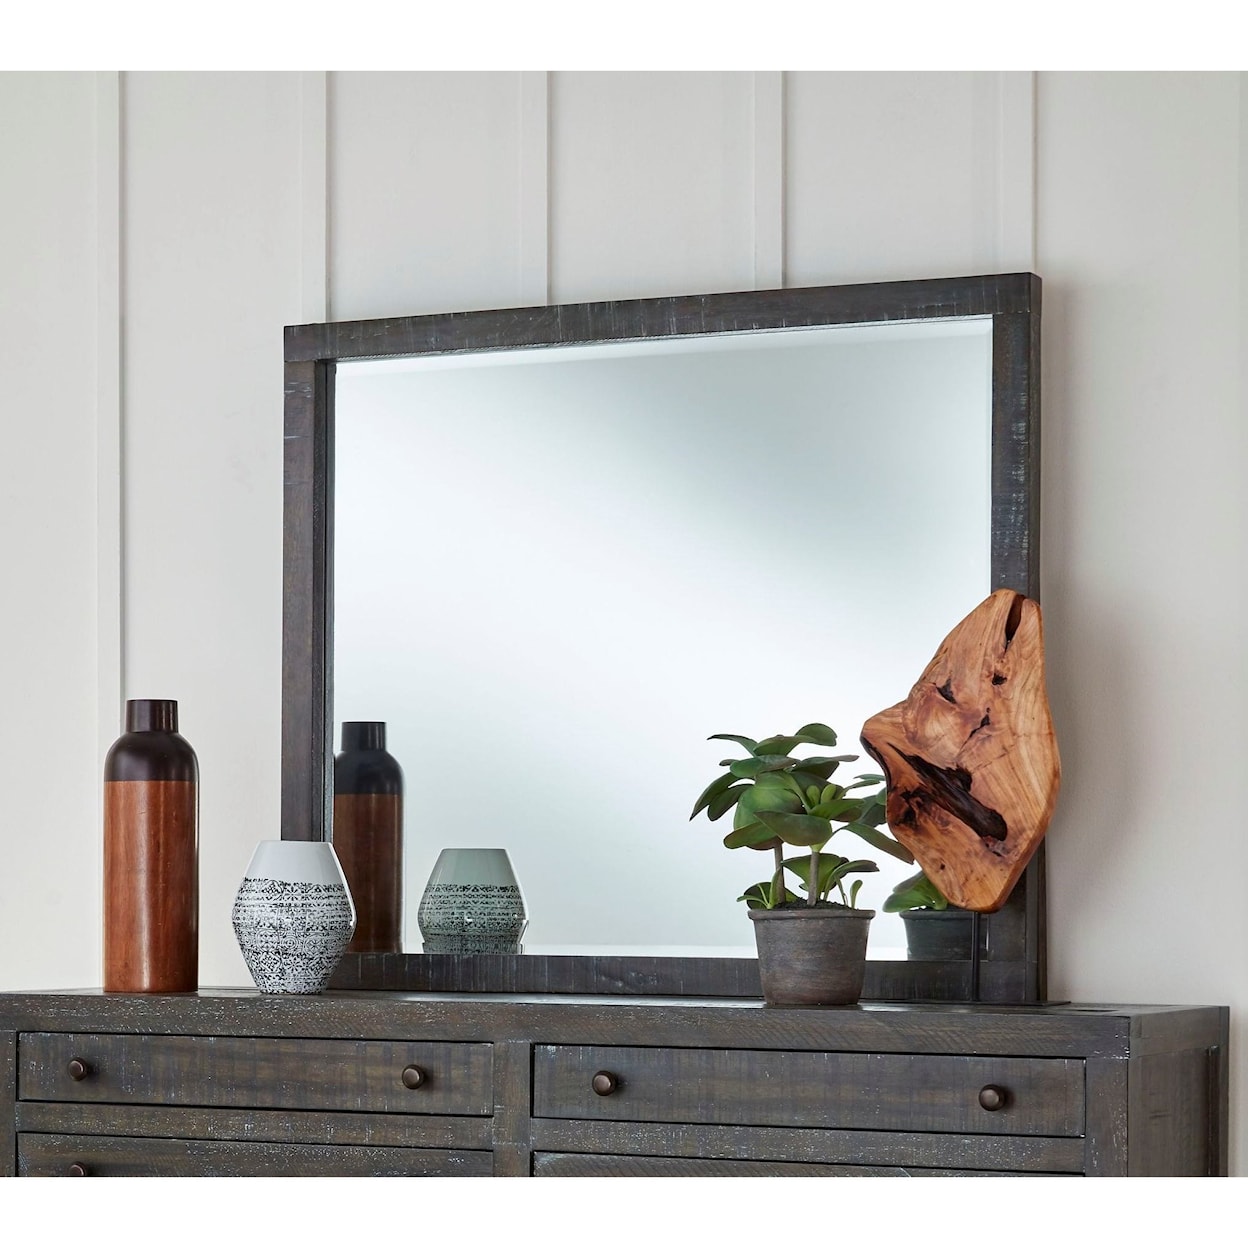 Modus International Townsend Mirror with Wood Frame